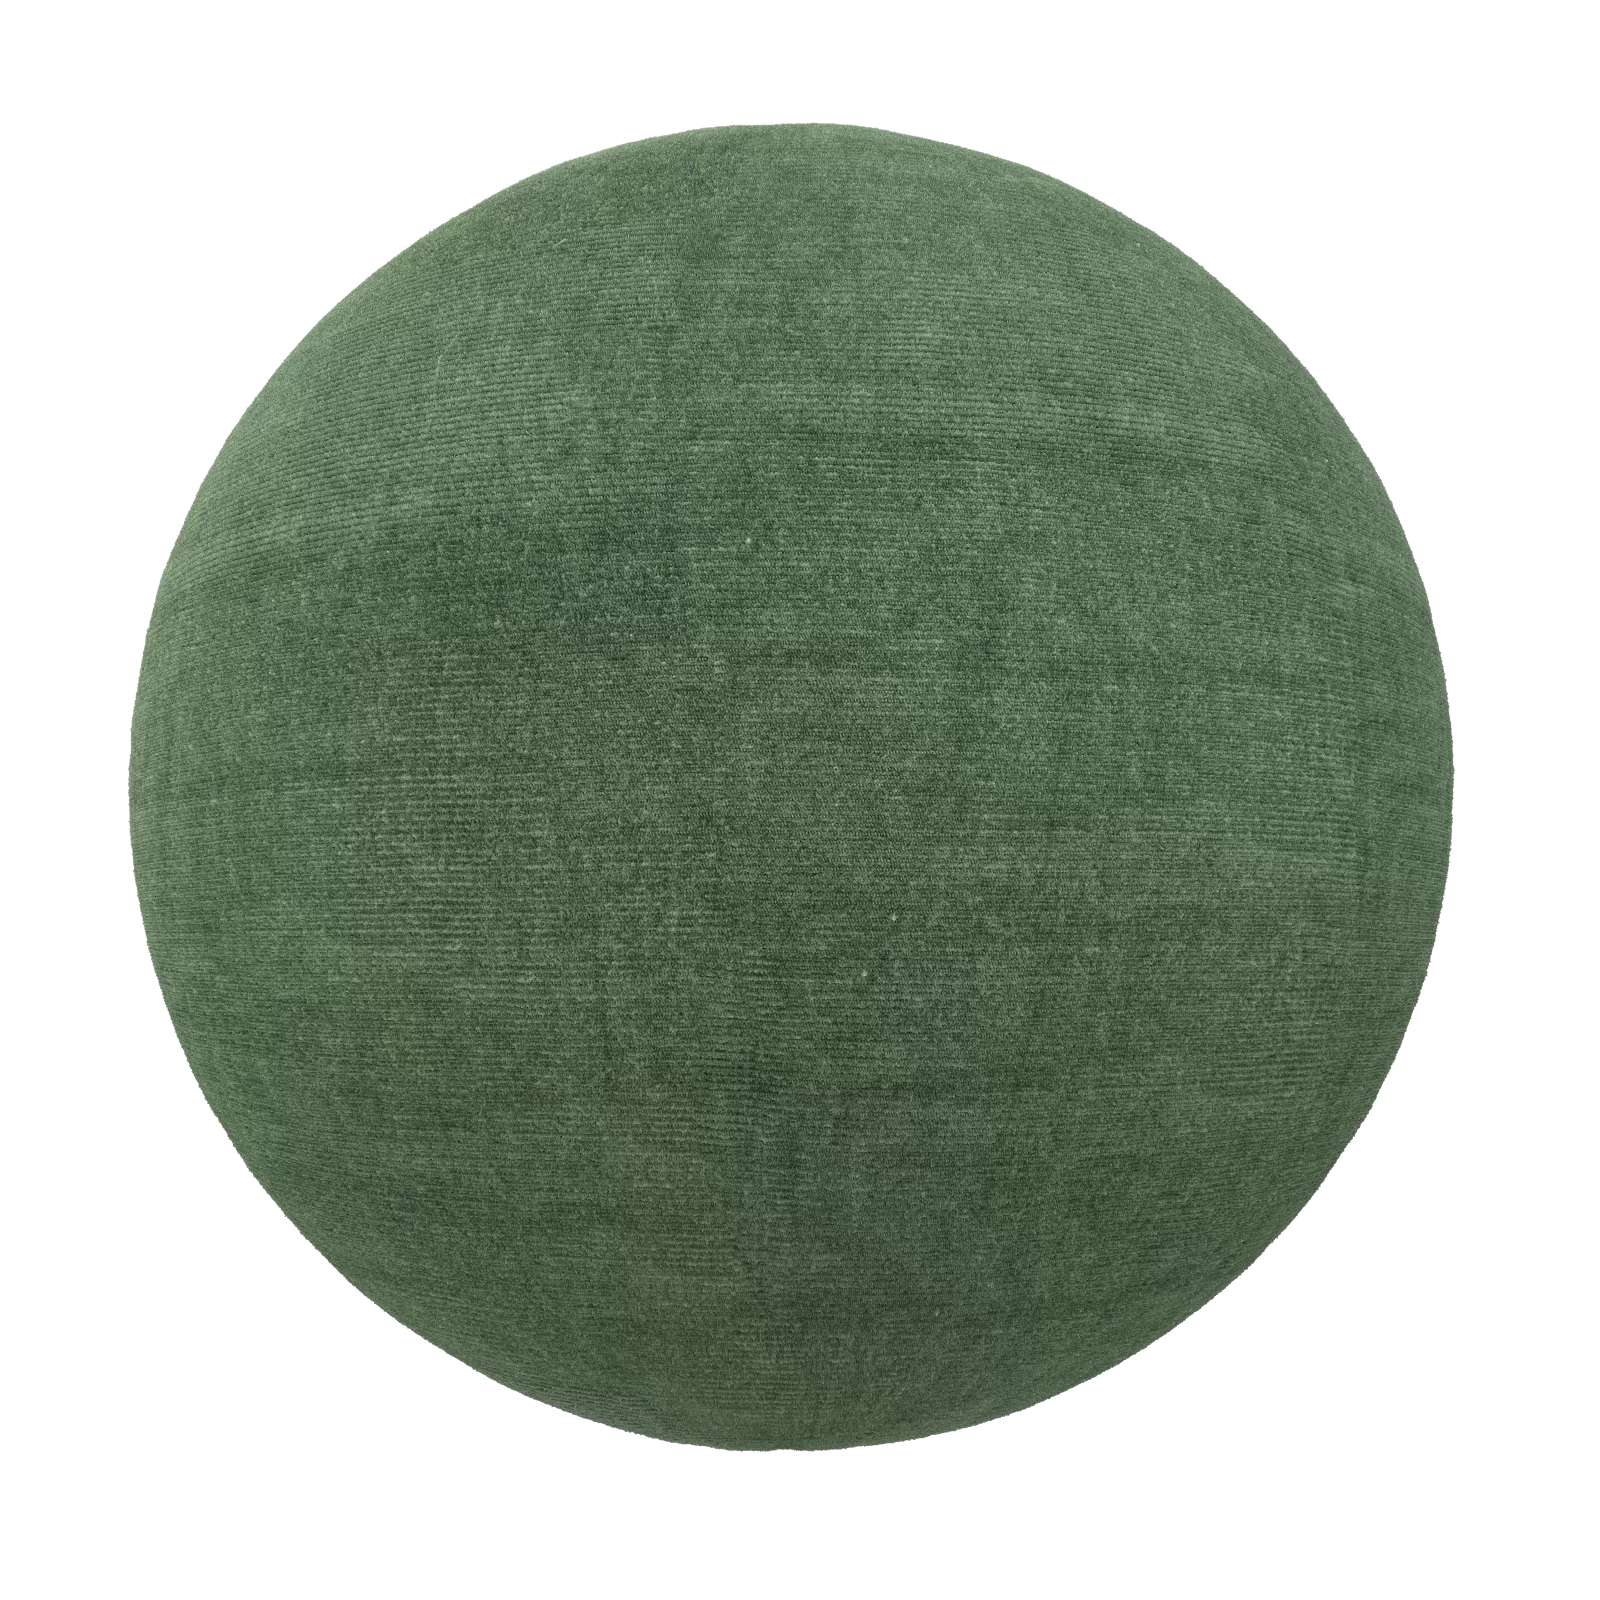 PBR CGAXIS TEXTURES – FABRICS – Green Fabric 03